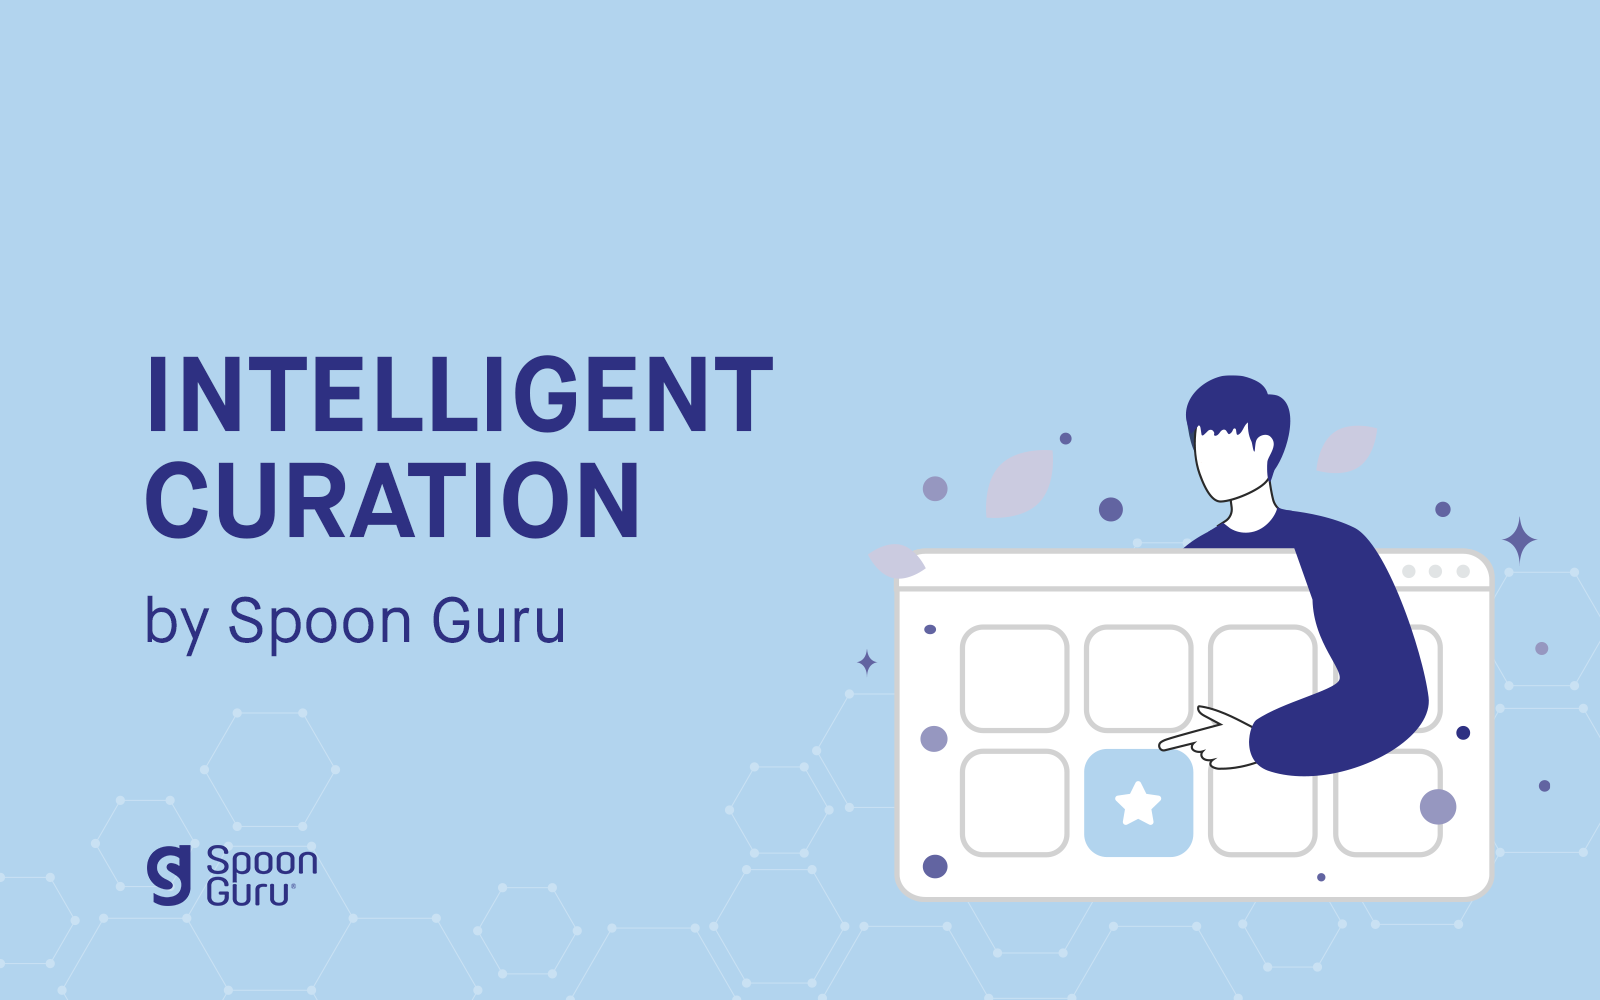 Intelligent Curation by Spoon Guru